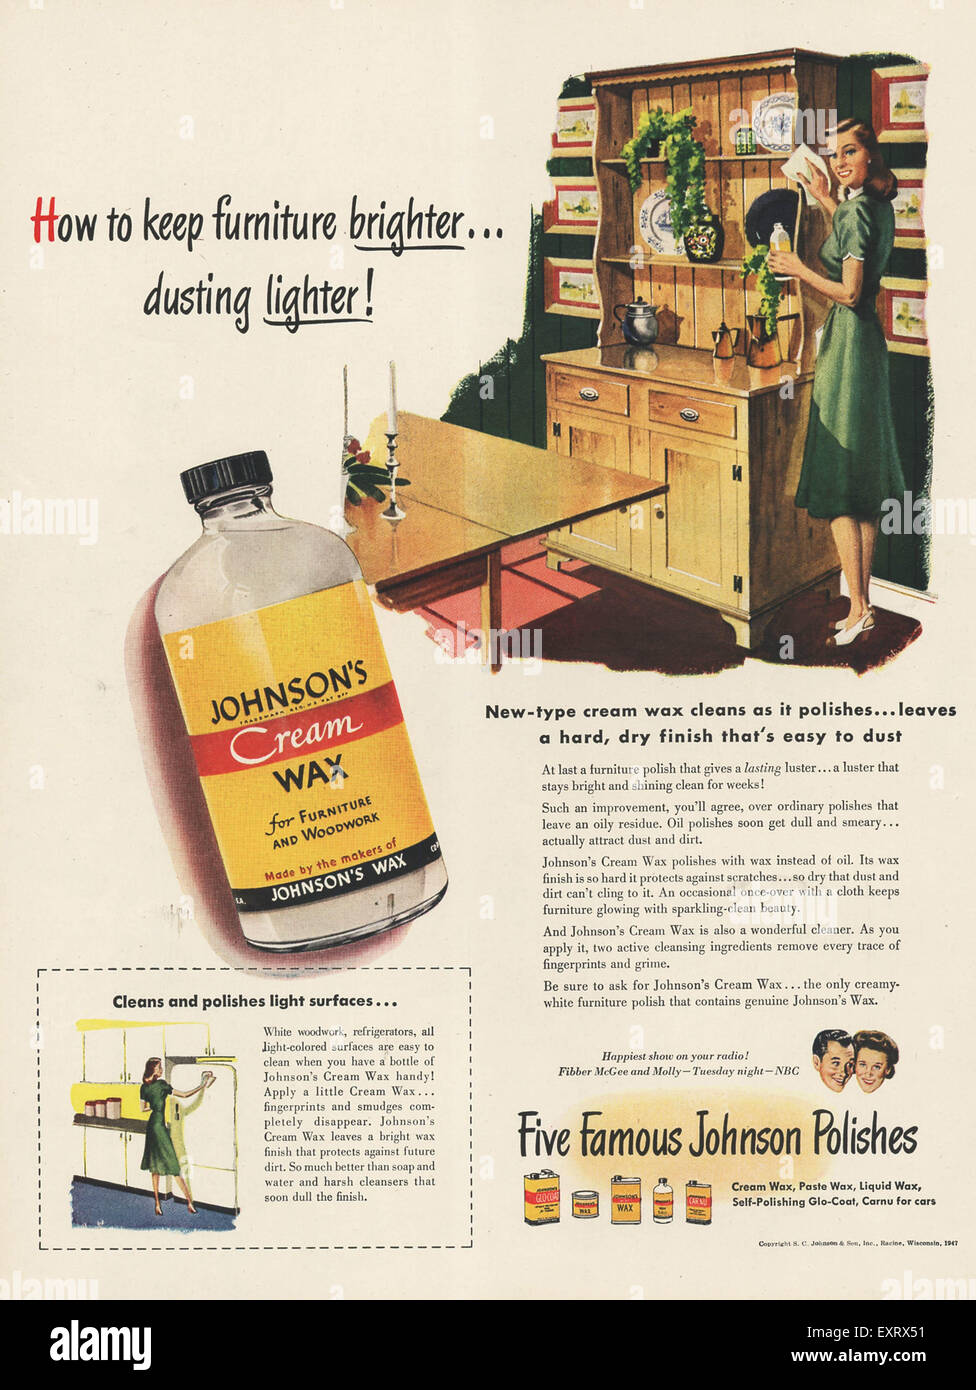 Vintage Jubilee Kitchen Wax Spray 9 oz Johnson Wax SC Johnson